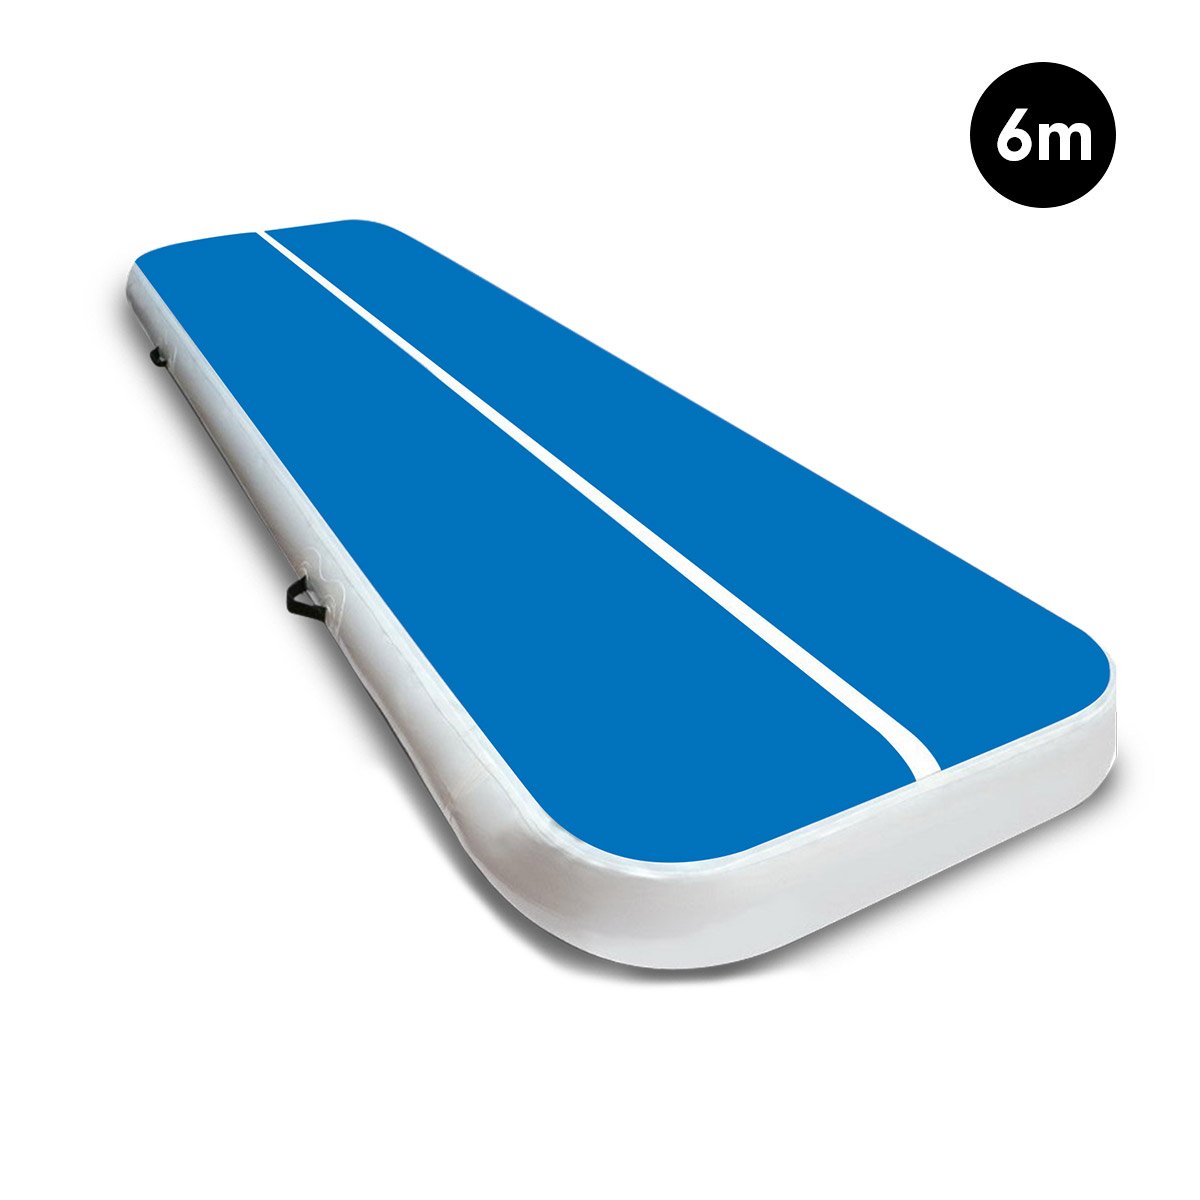 6m x 1m Air Track Inflatable Tumbling Gymnastics Mat - Blue White 1